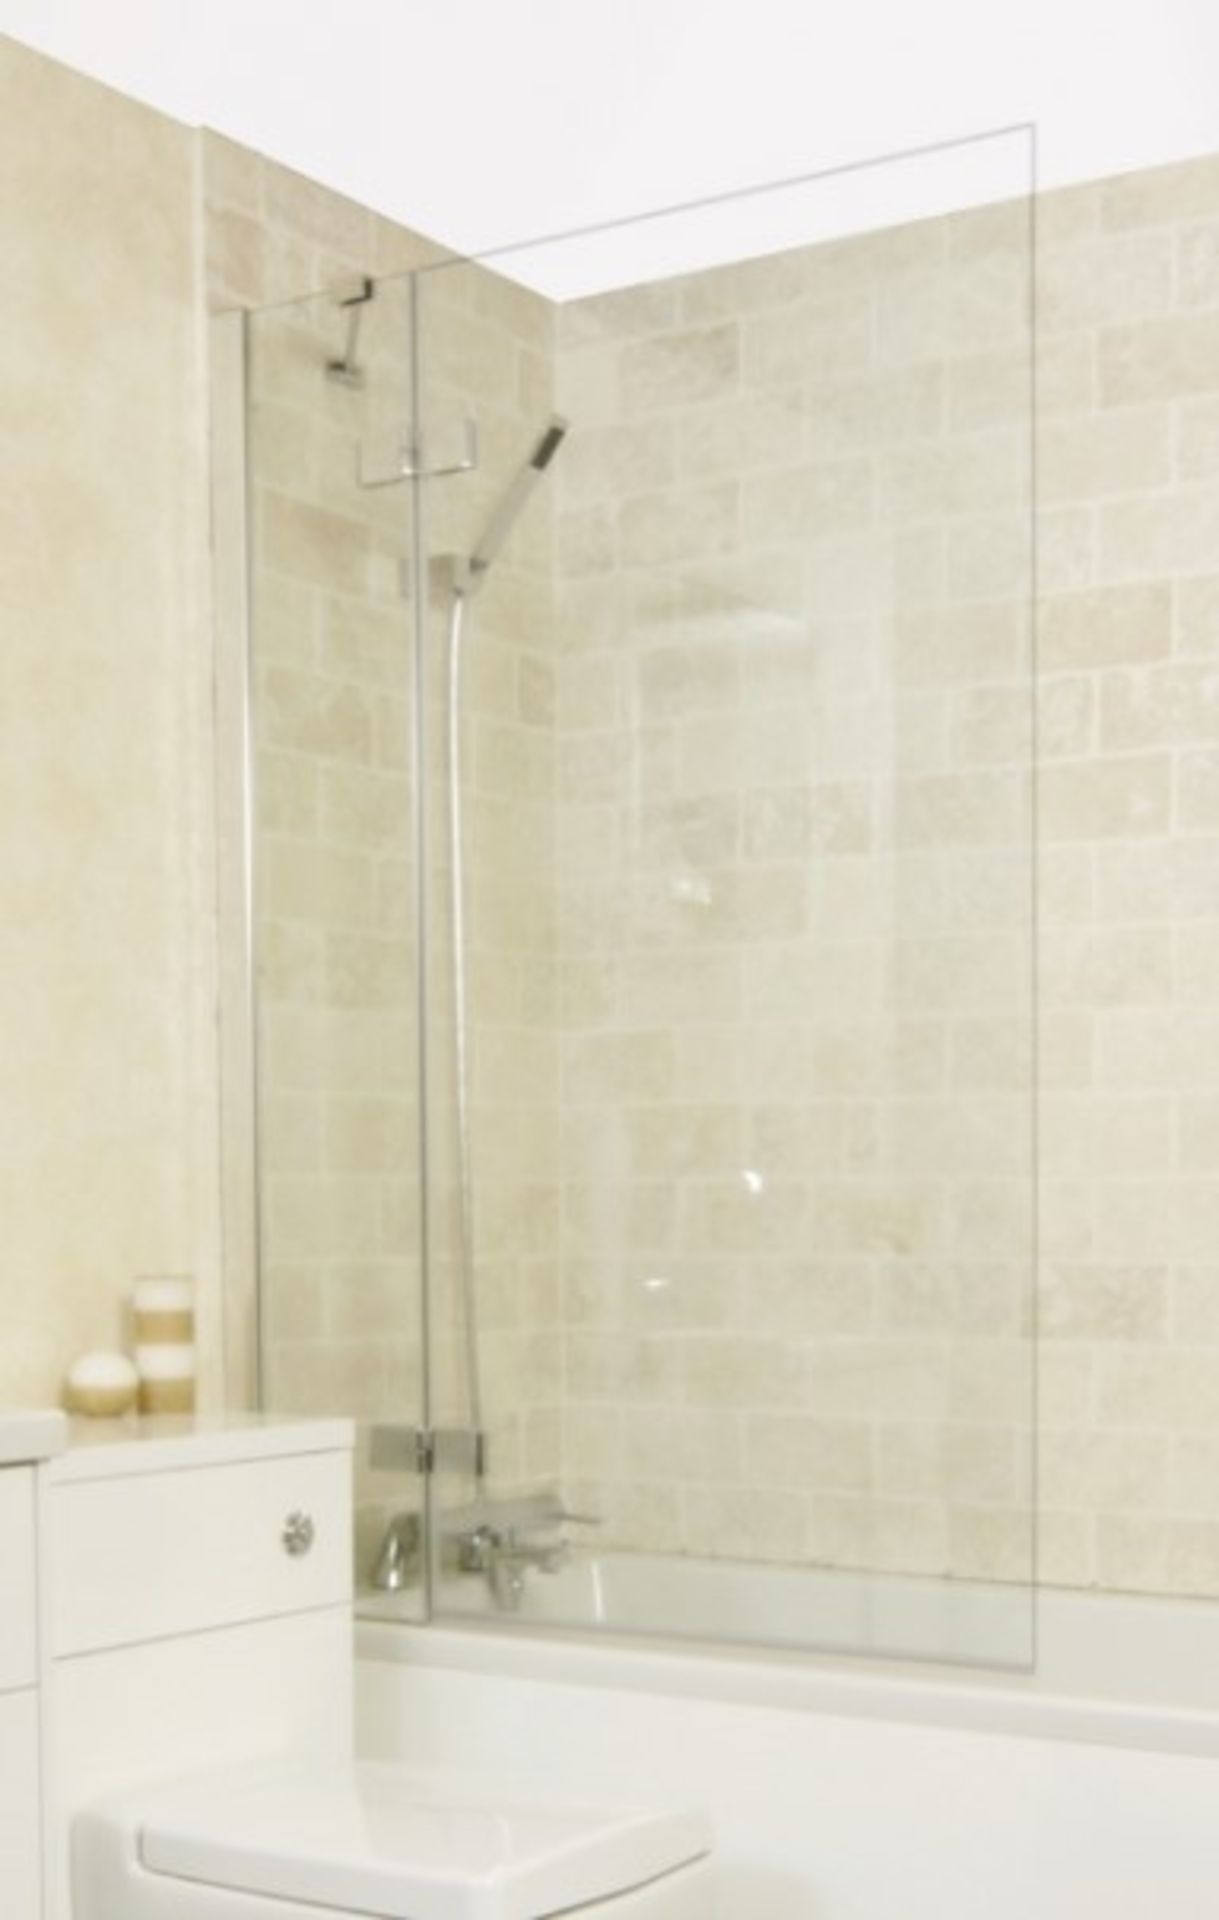 1 x Dovcor Tolima 1700 x 750 Single Acrylic End Bath - Includes Screen - D.001.003.SE - Corensis - Image 2 of 2